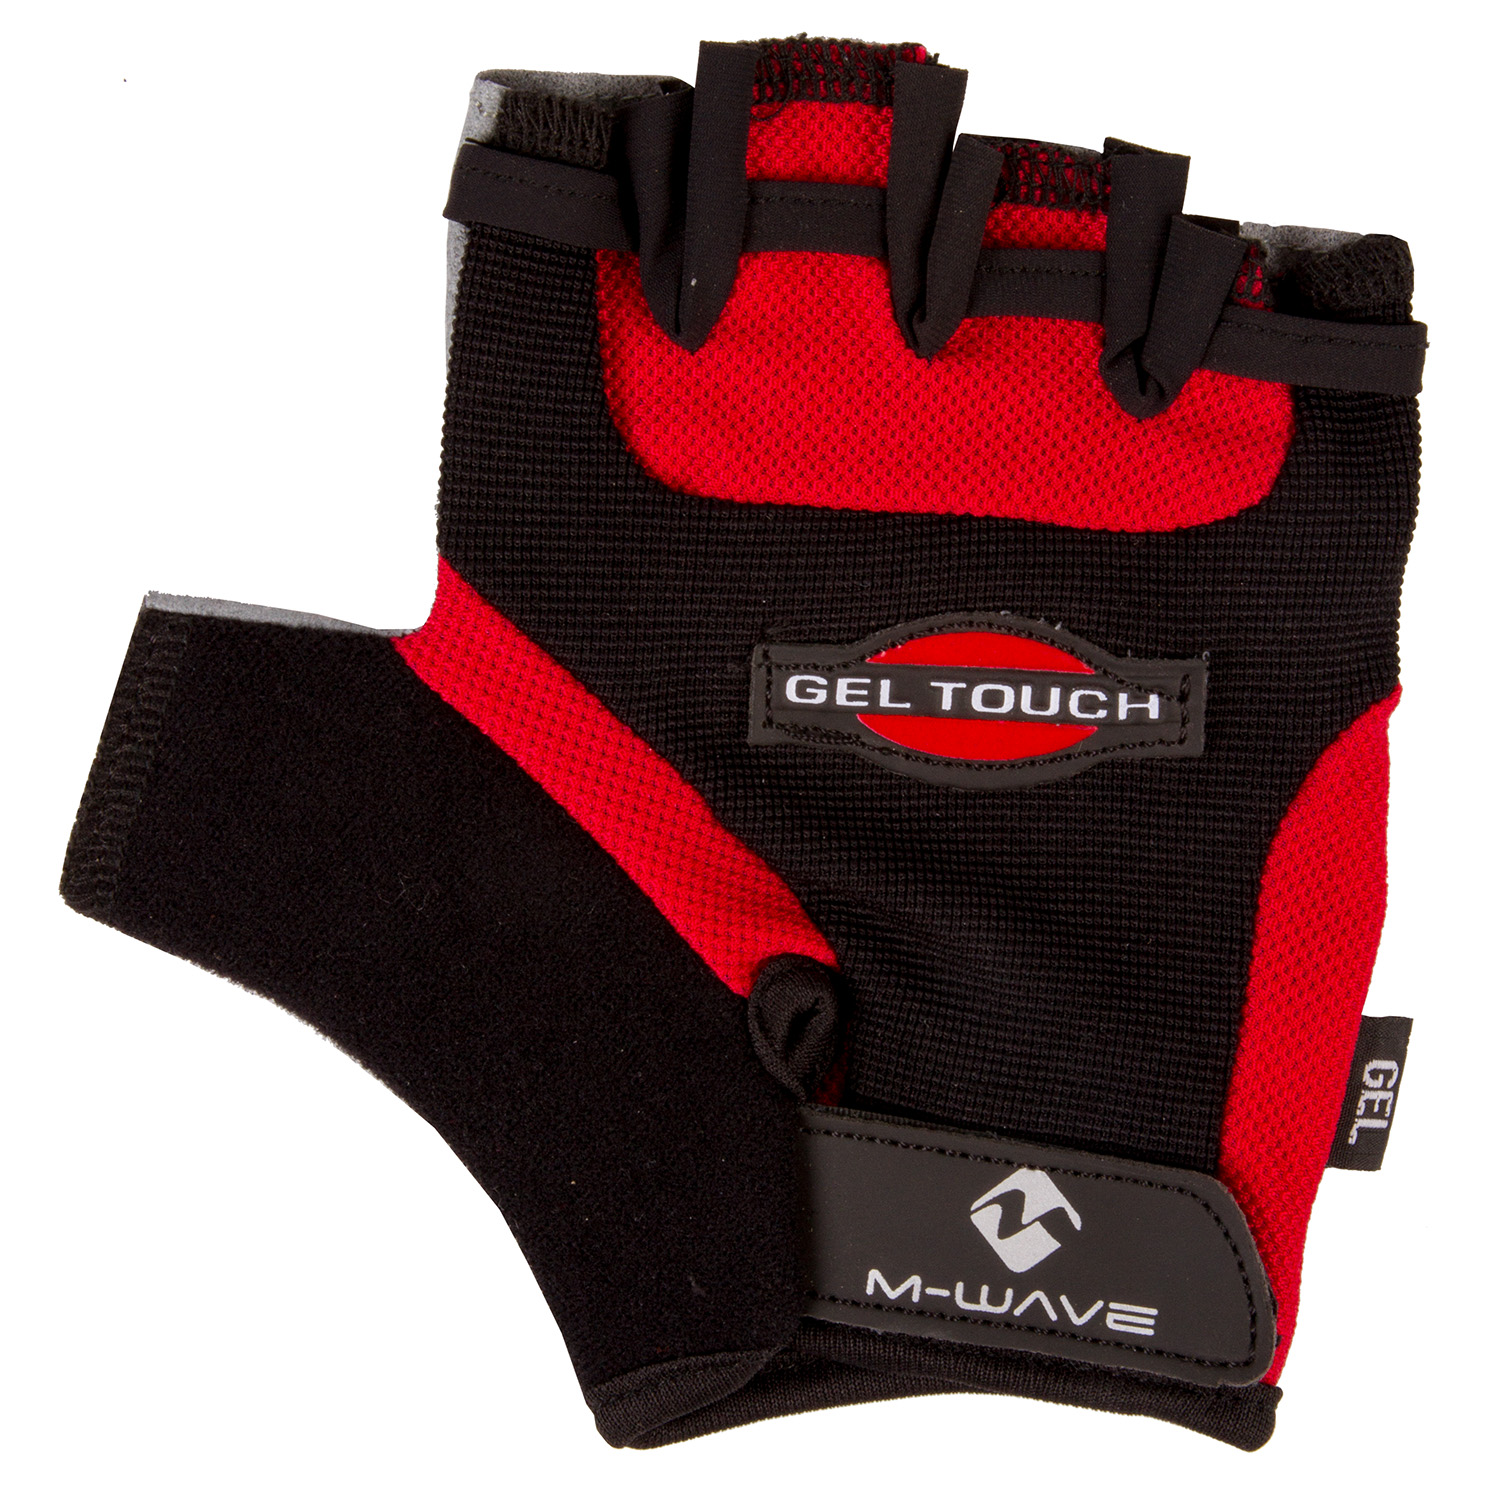 Halb-Finger-Handschuh GEL TOUCH Gr. XL farbig sortiert